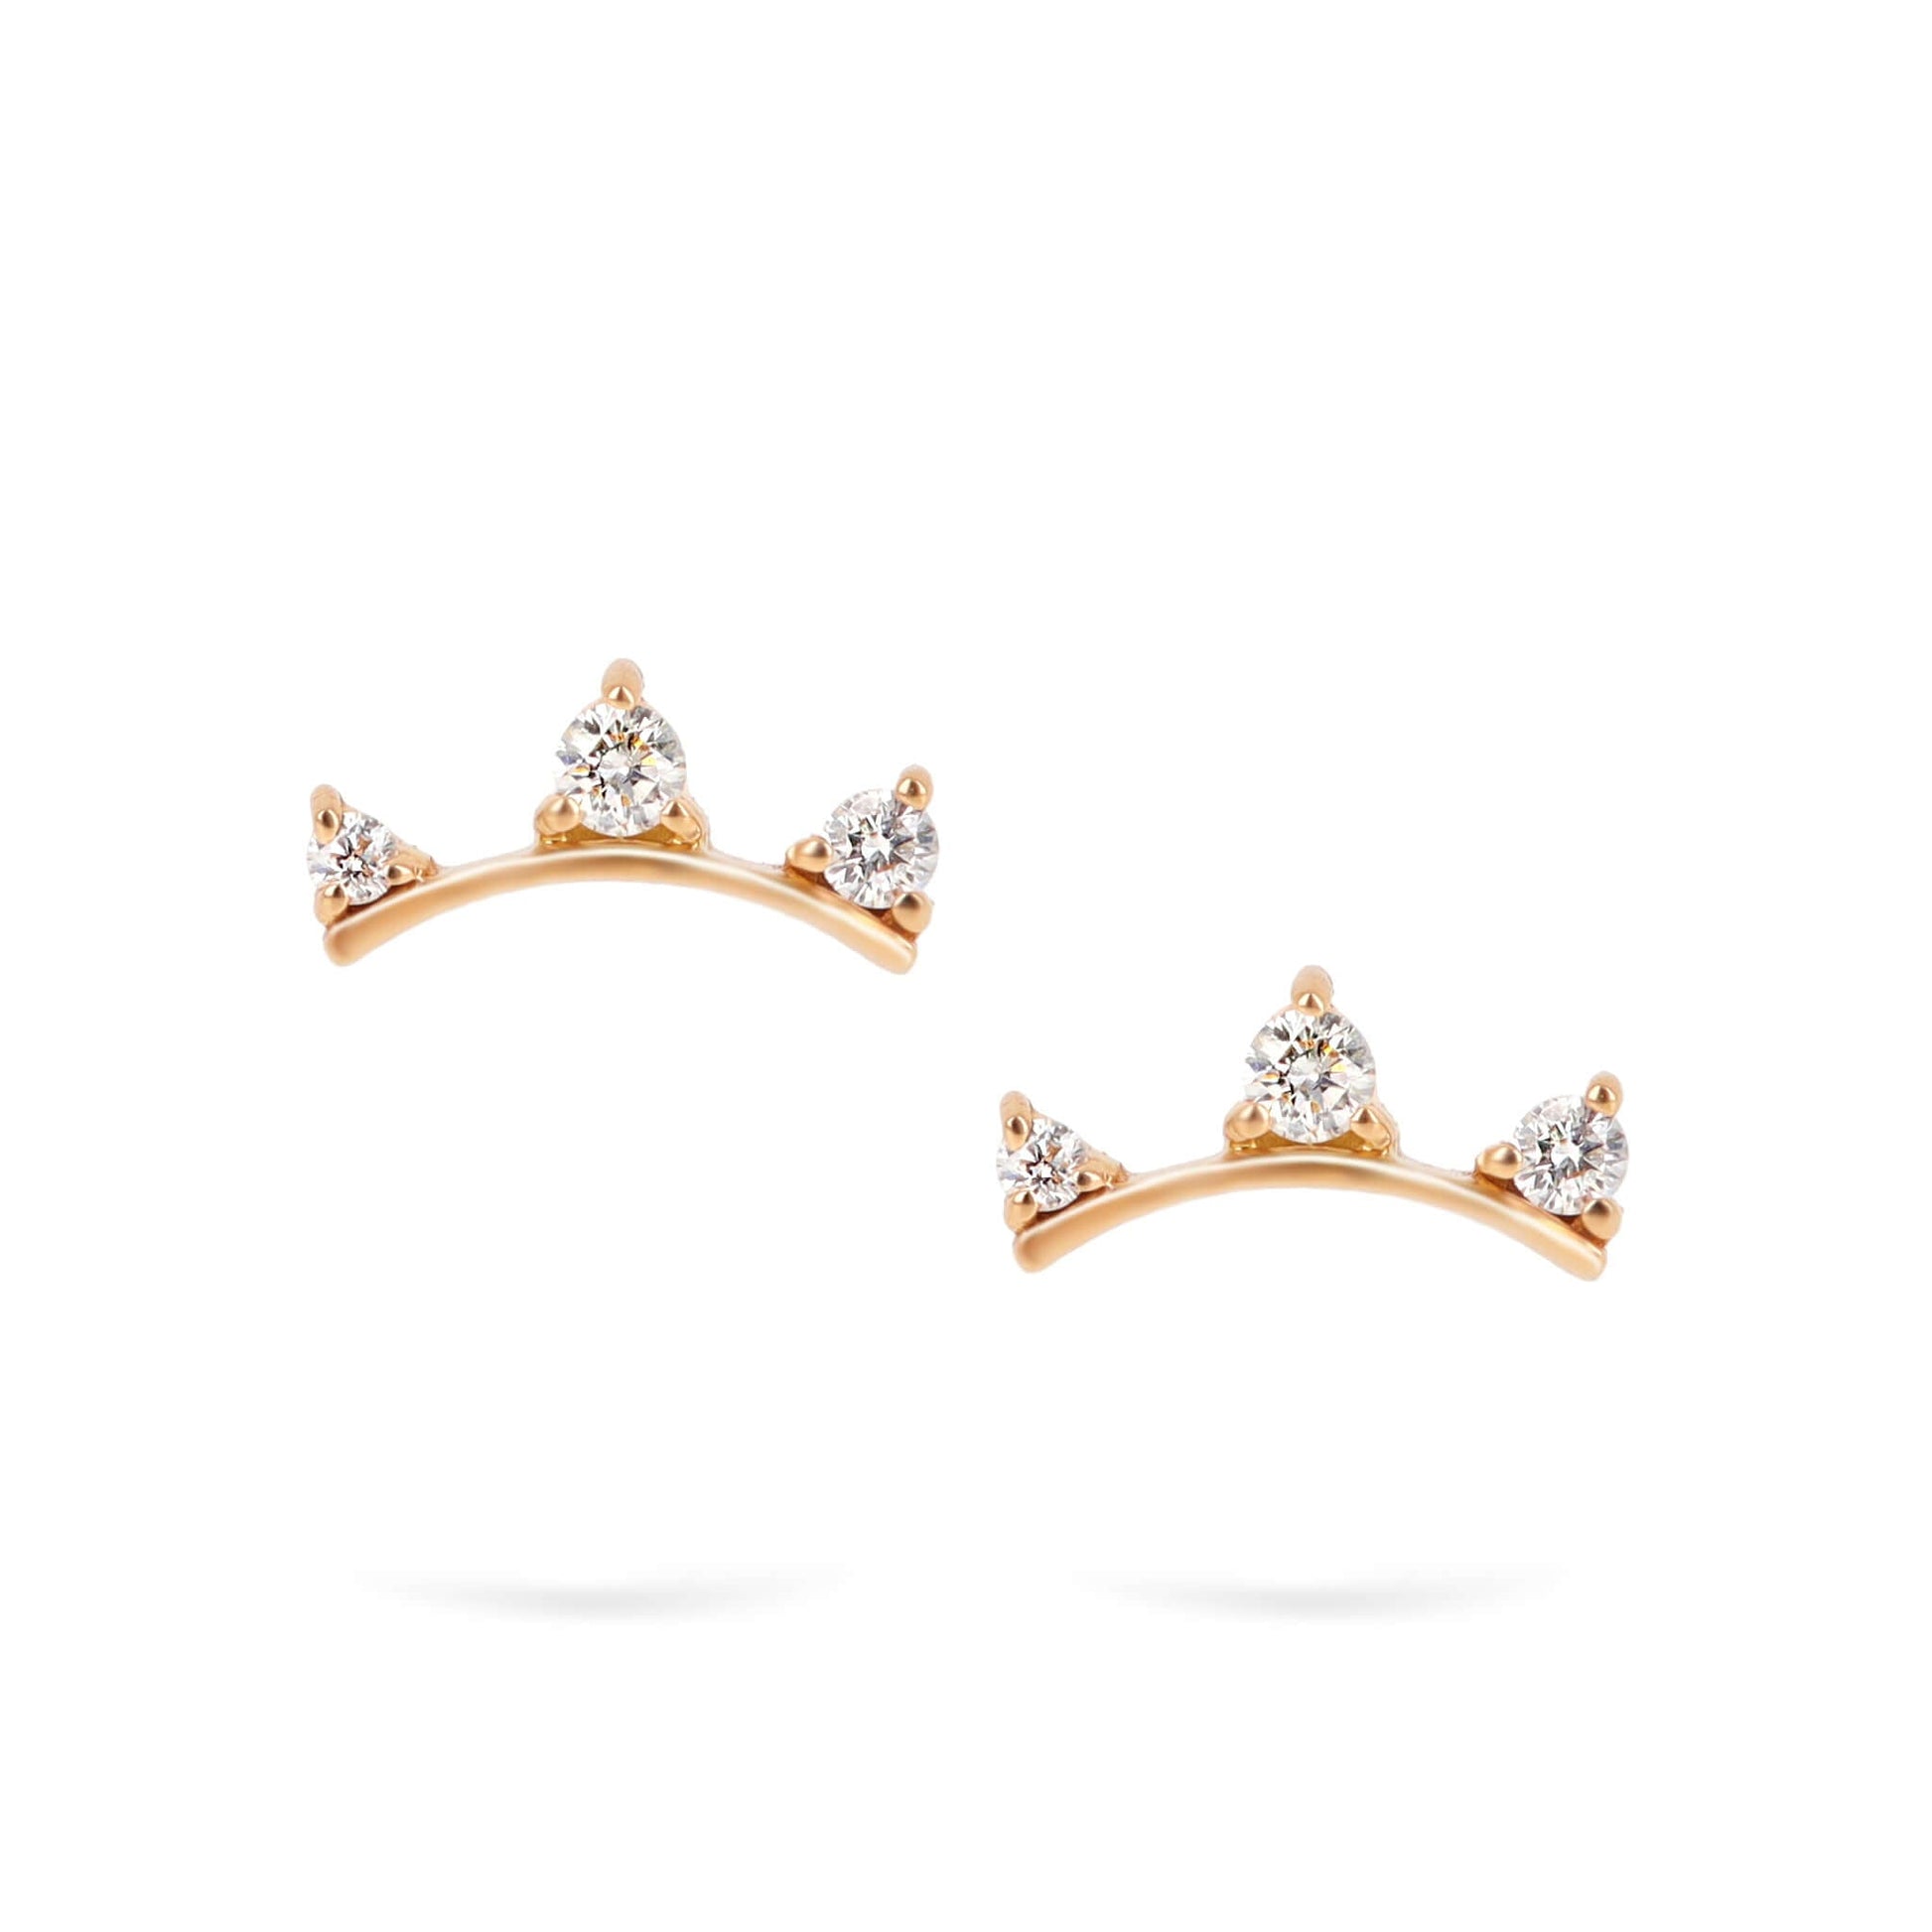 Gilda Jewelry Cheerful Trio | Diamond Earrings | 14K Gold - Rose / Pair: 0.15 Cts. | Round Cut - earrings Zengoda Shop